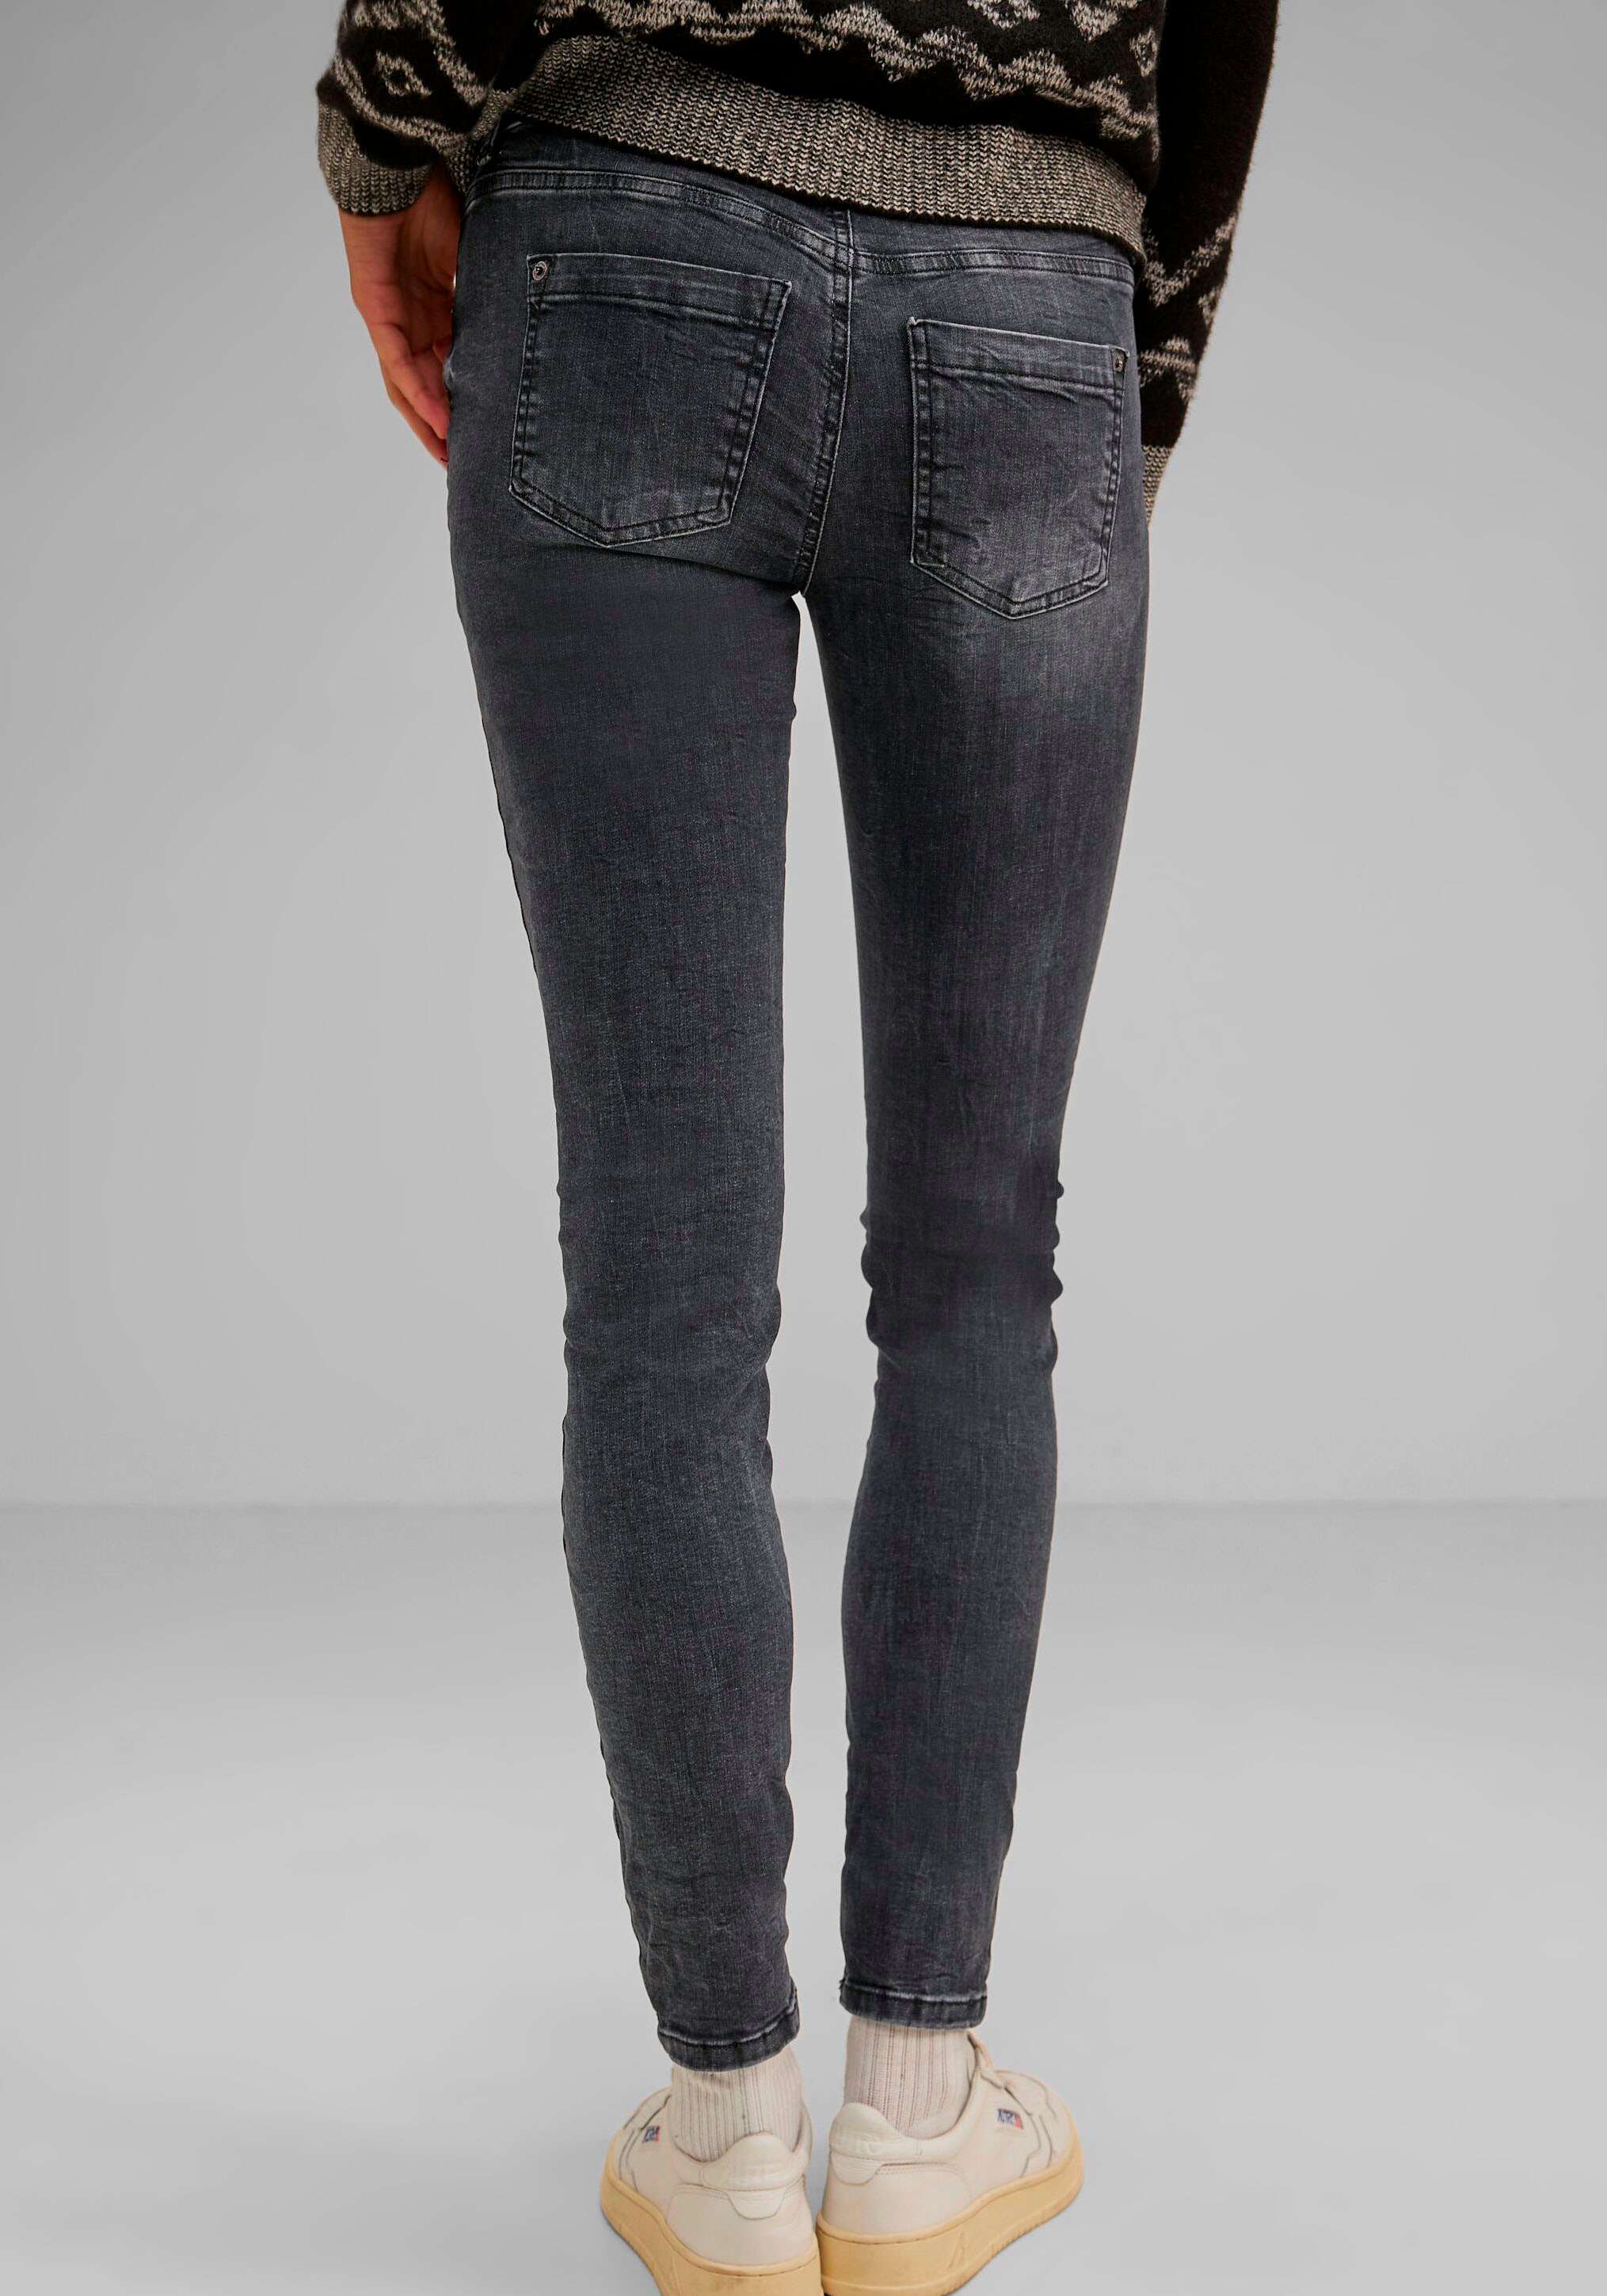 STREET ONE Skinny-fit-Jeans, mit schmalem Bein